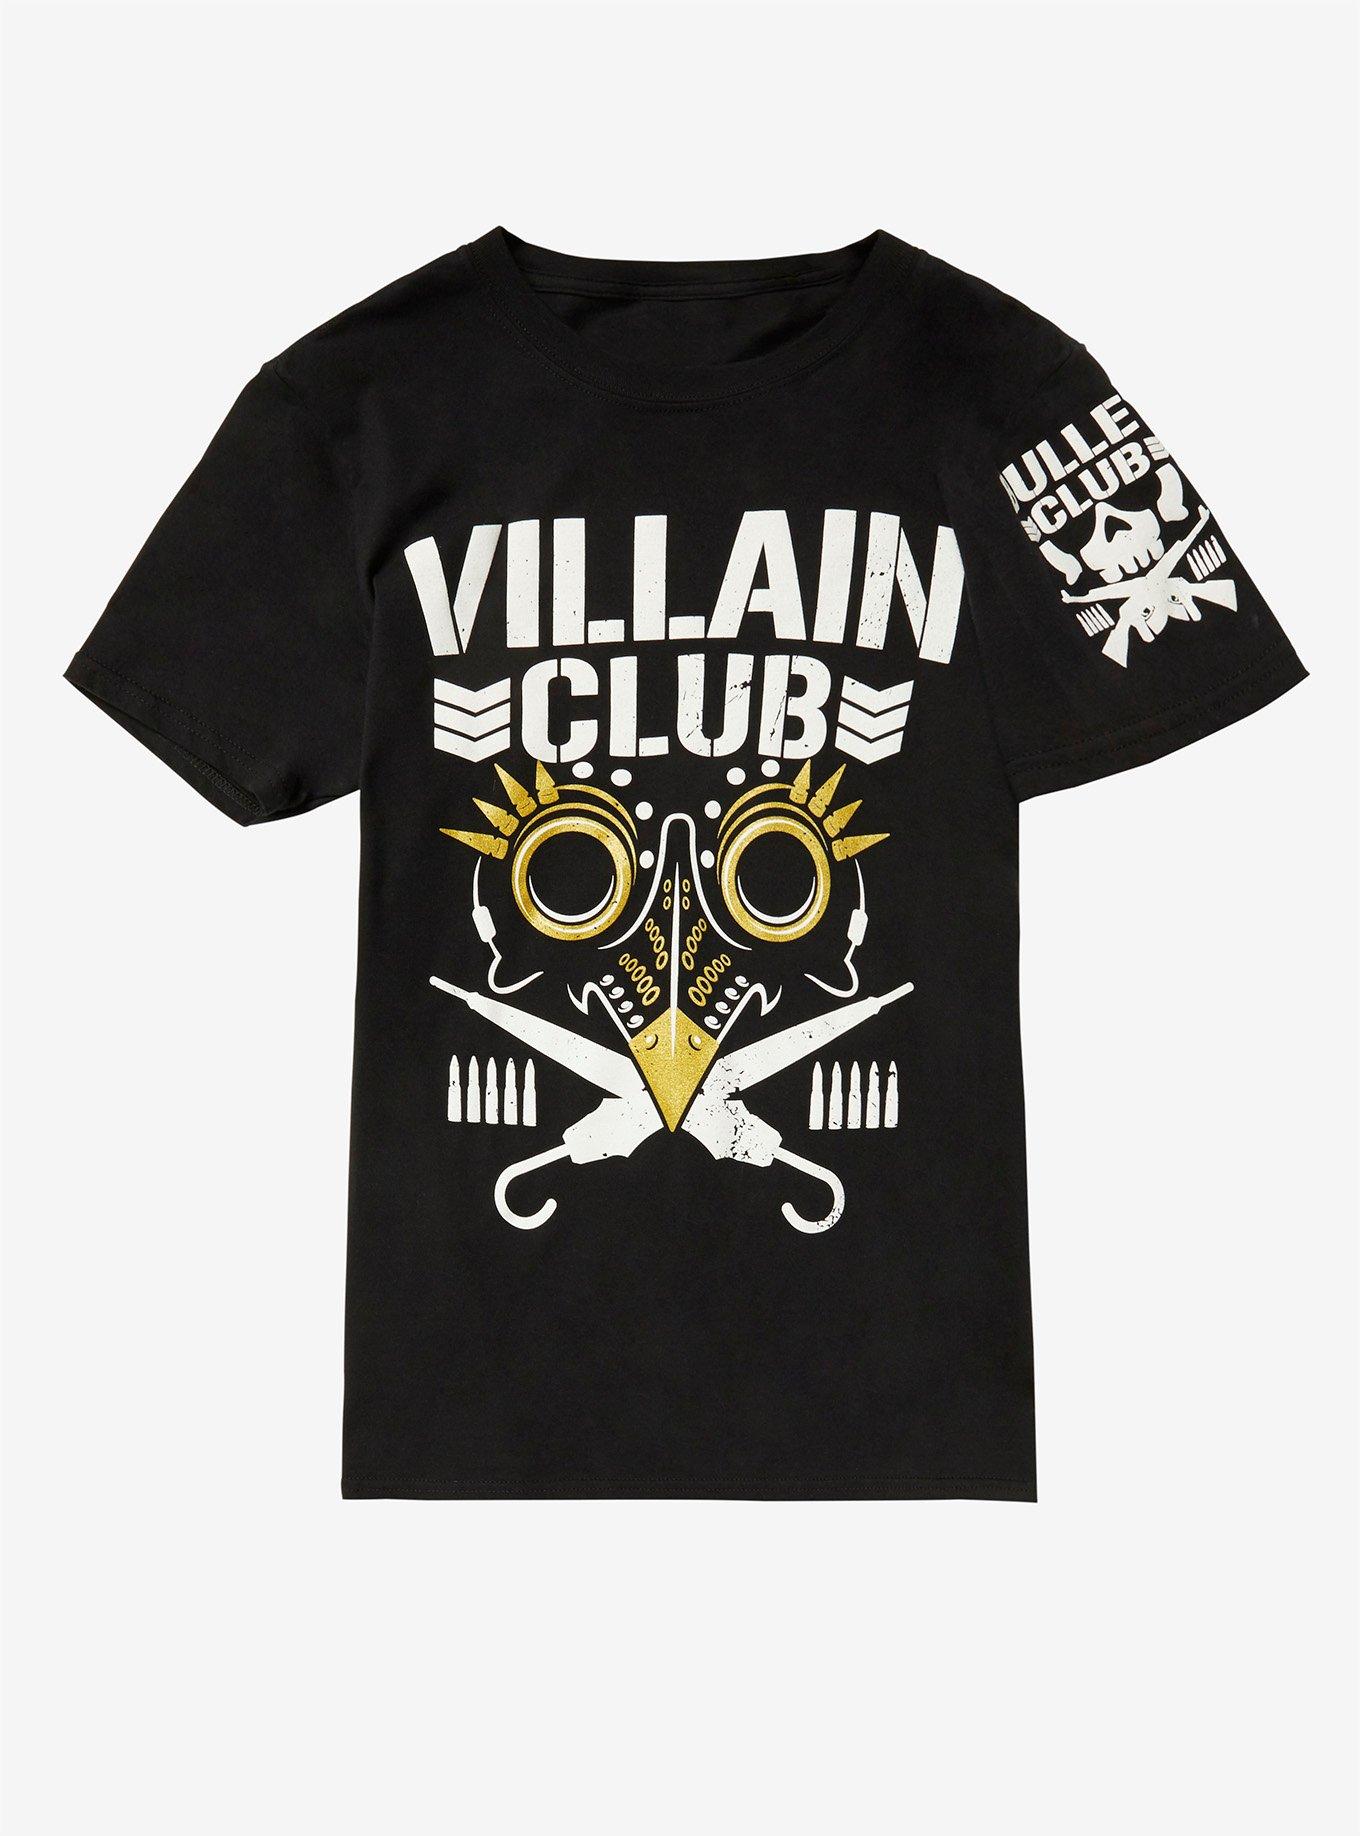 New Japan Pro-Wrestling Bullet Club Villain Club Gold Accent T-Shirt, BLACK, hi-res